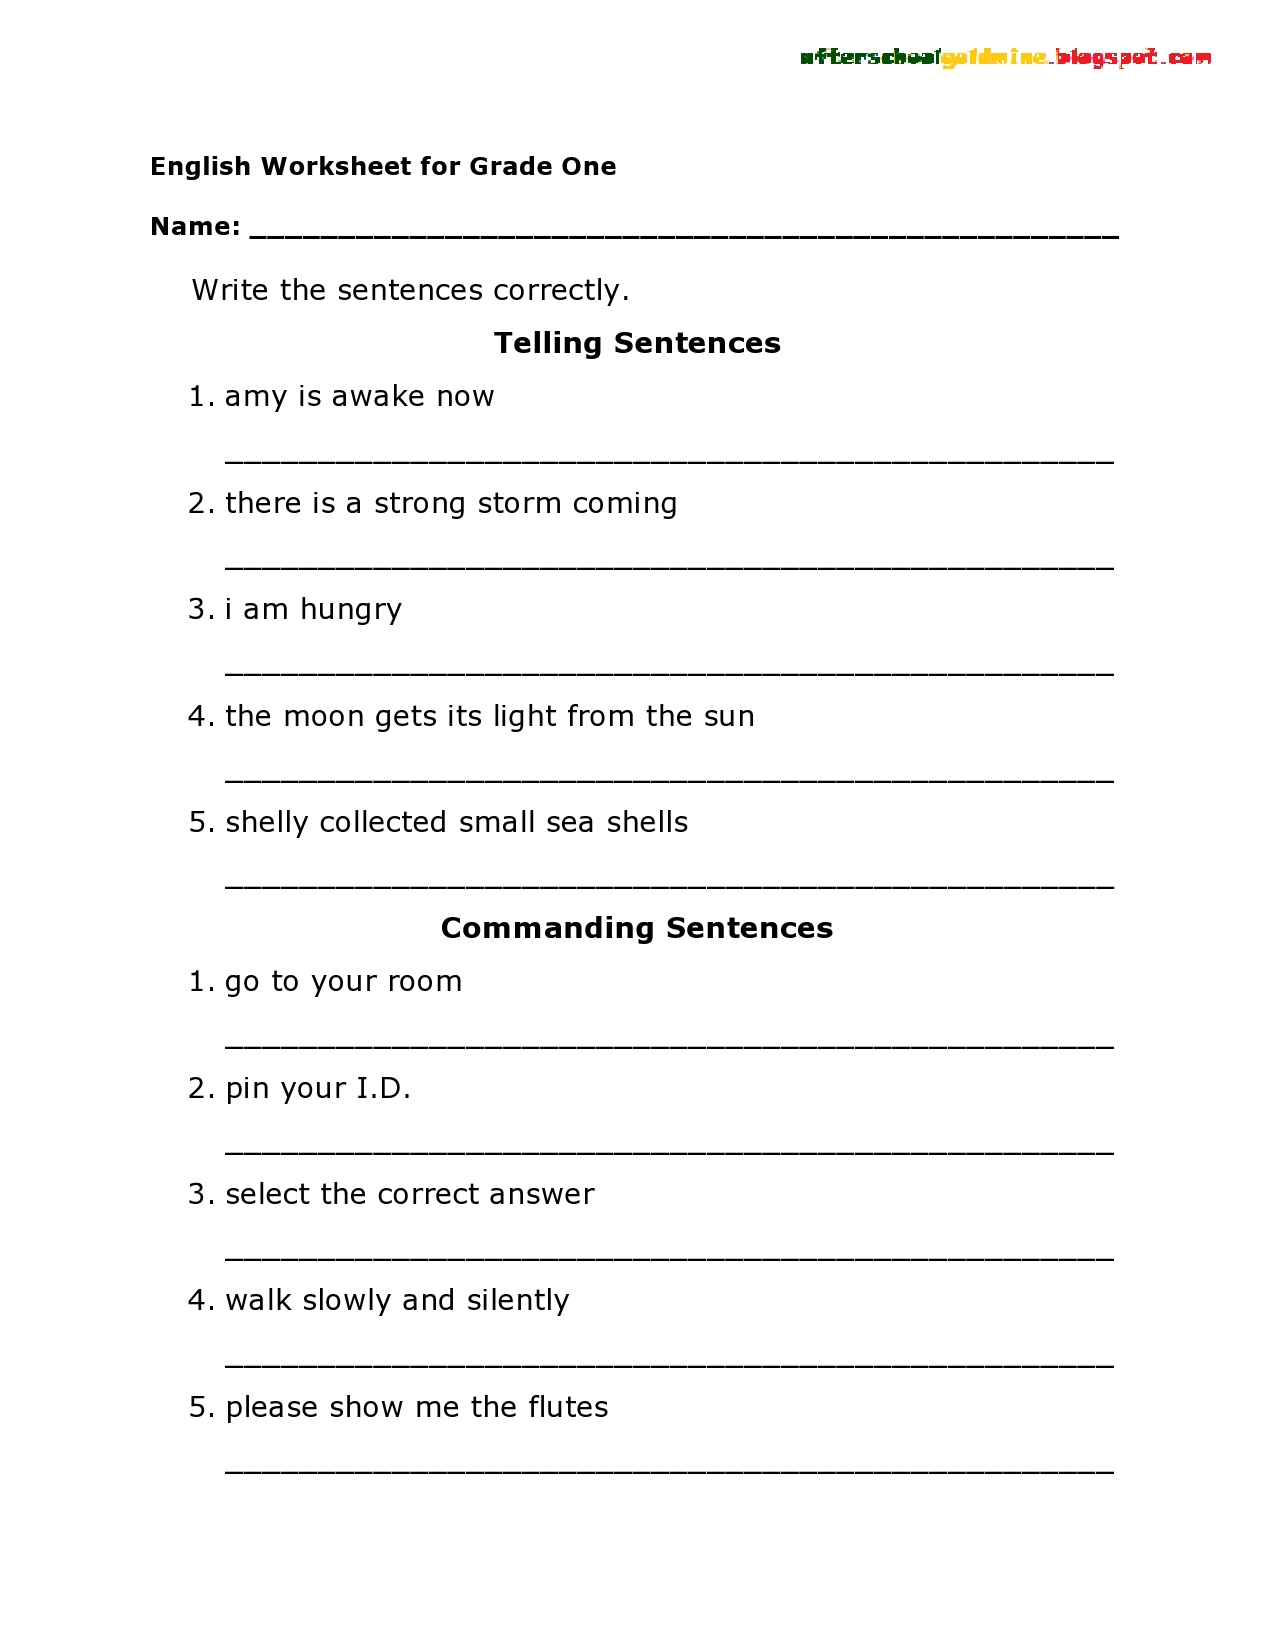 Writing Sentences Worksheets For Grade 1